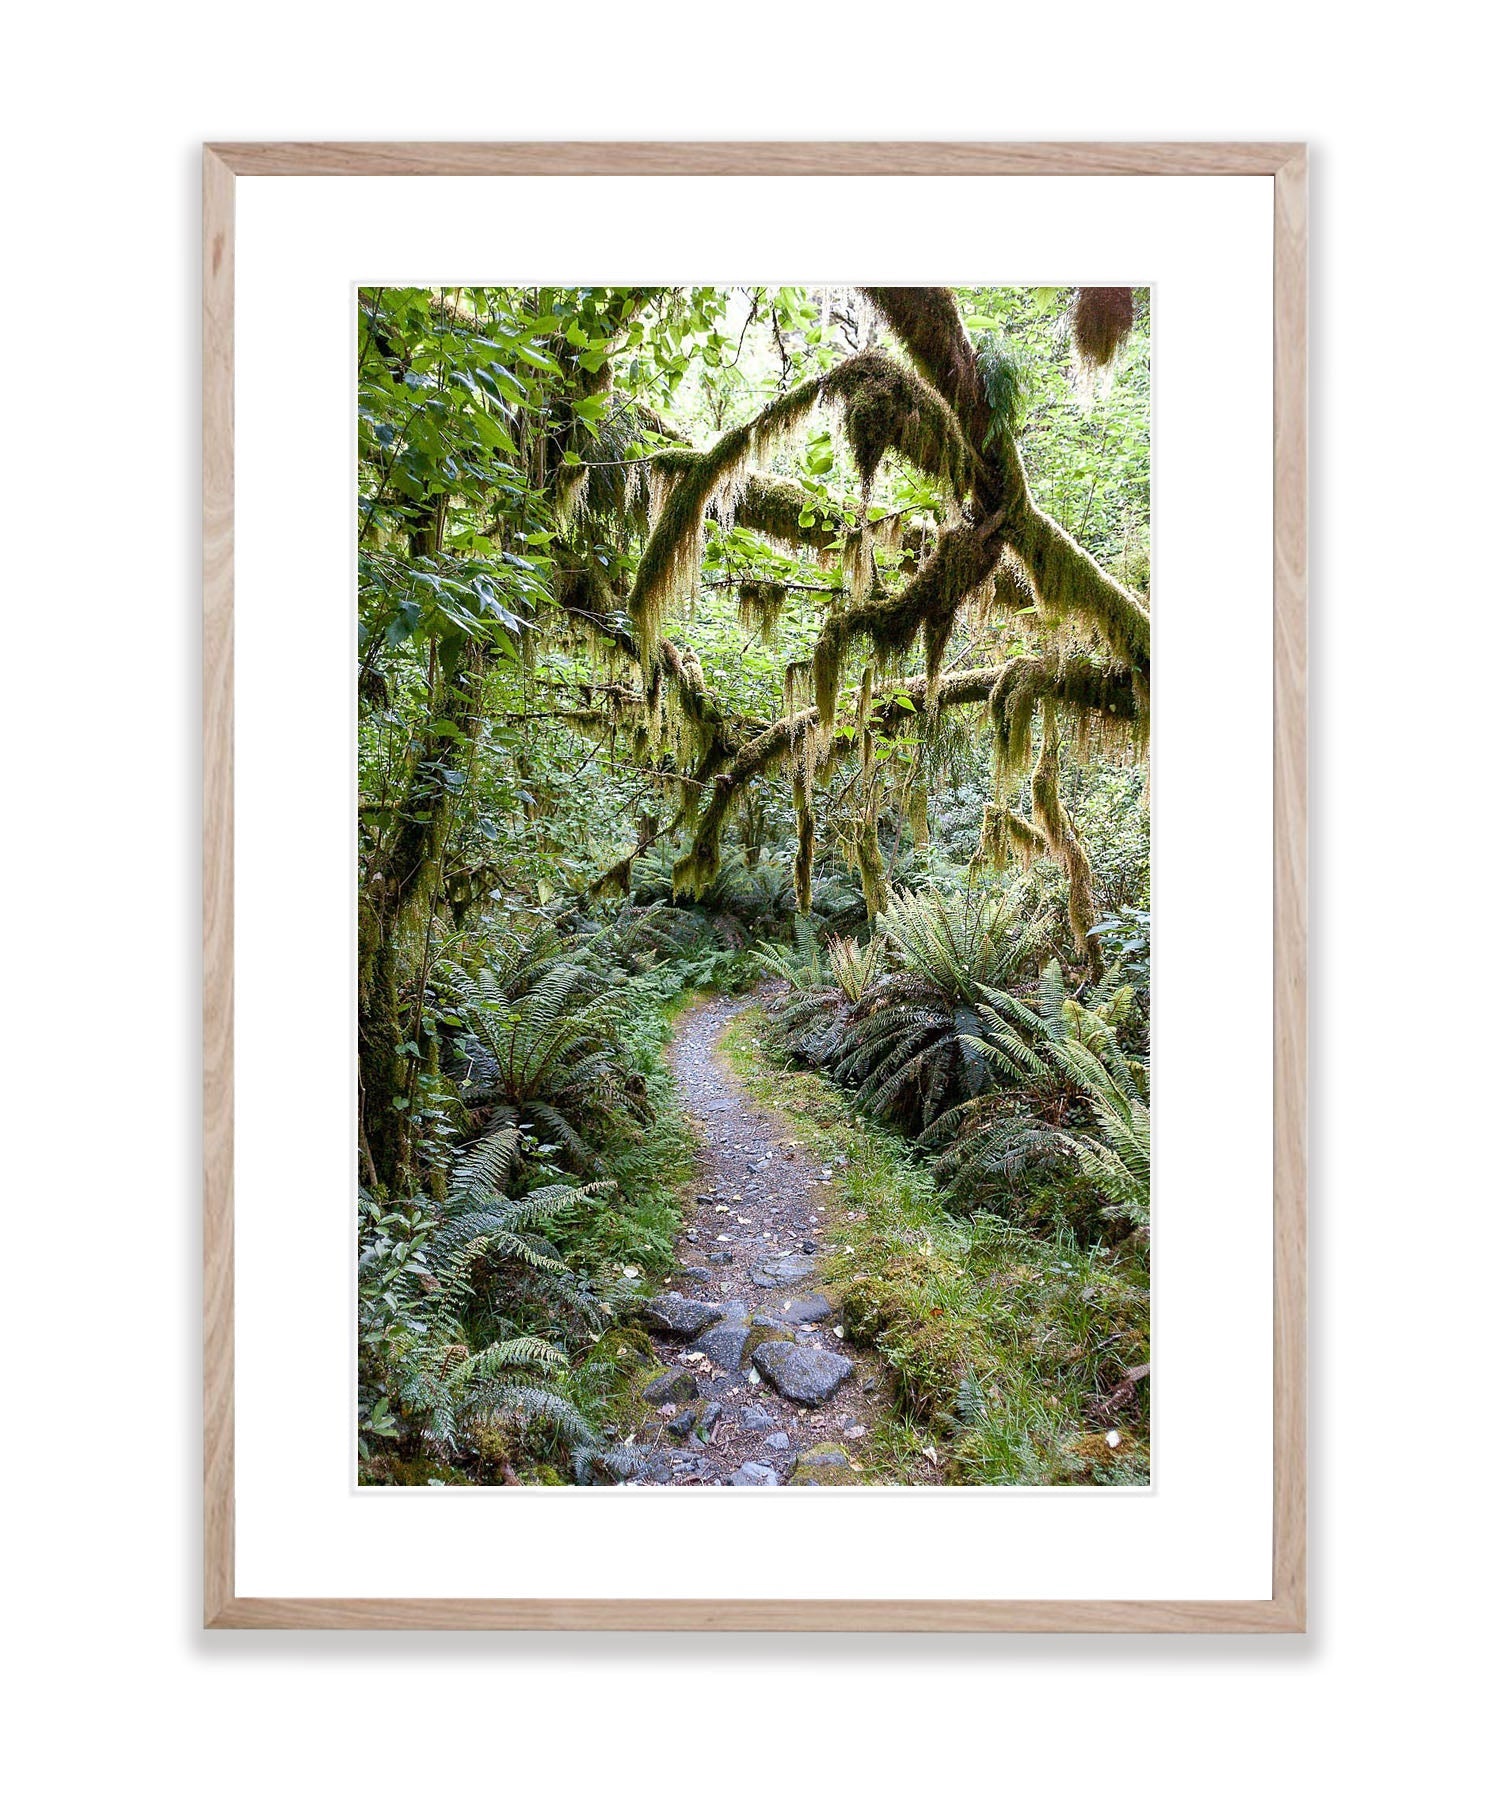 Milford Track rainforest - New Zealand